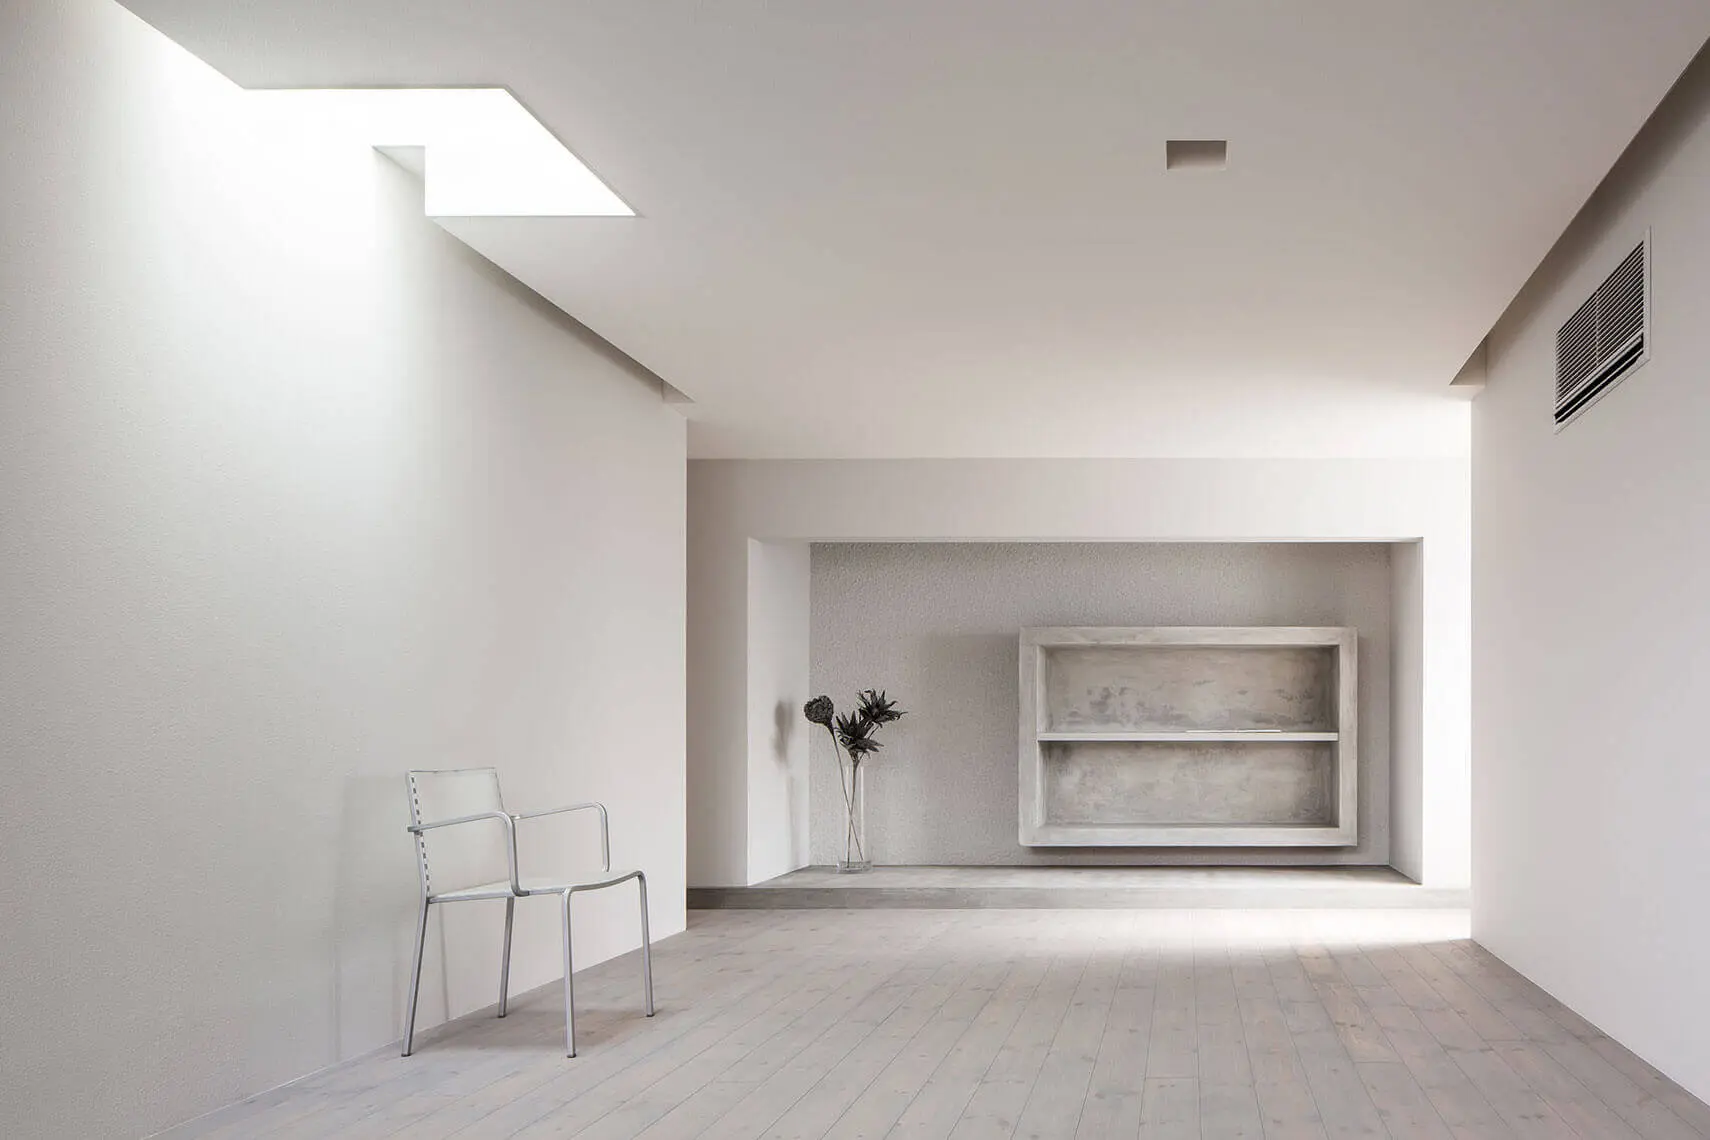 Form Kimura - Framing House minimalist interior